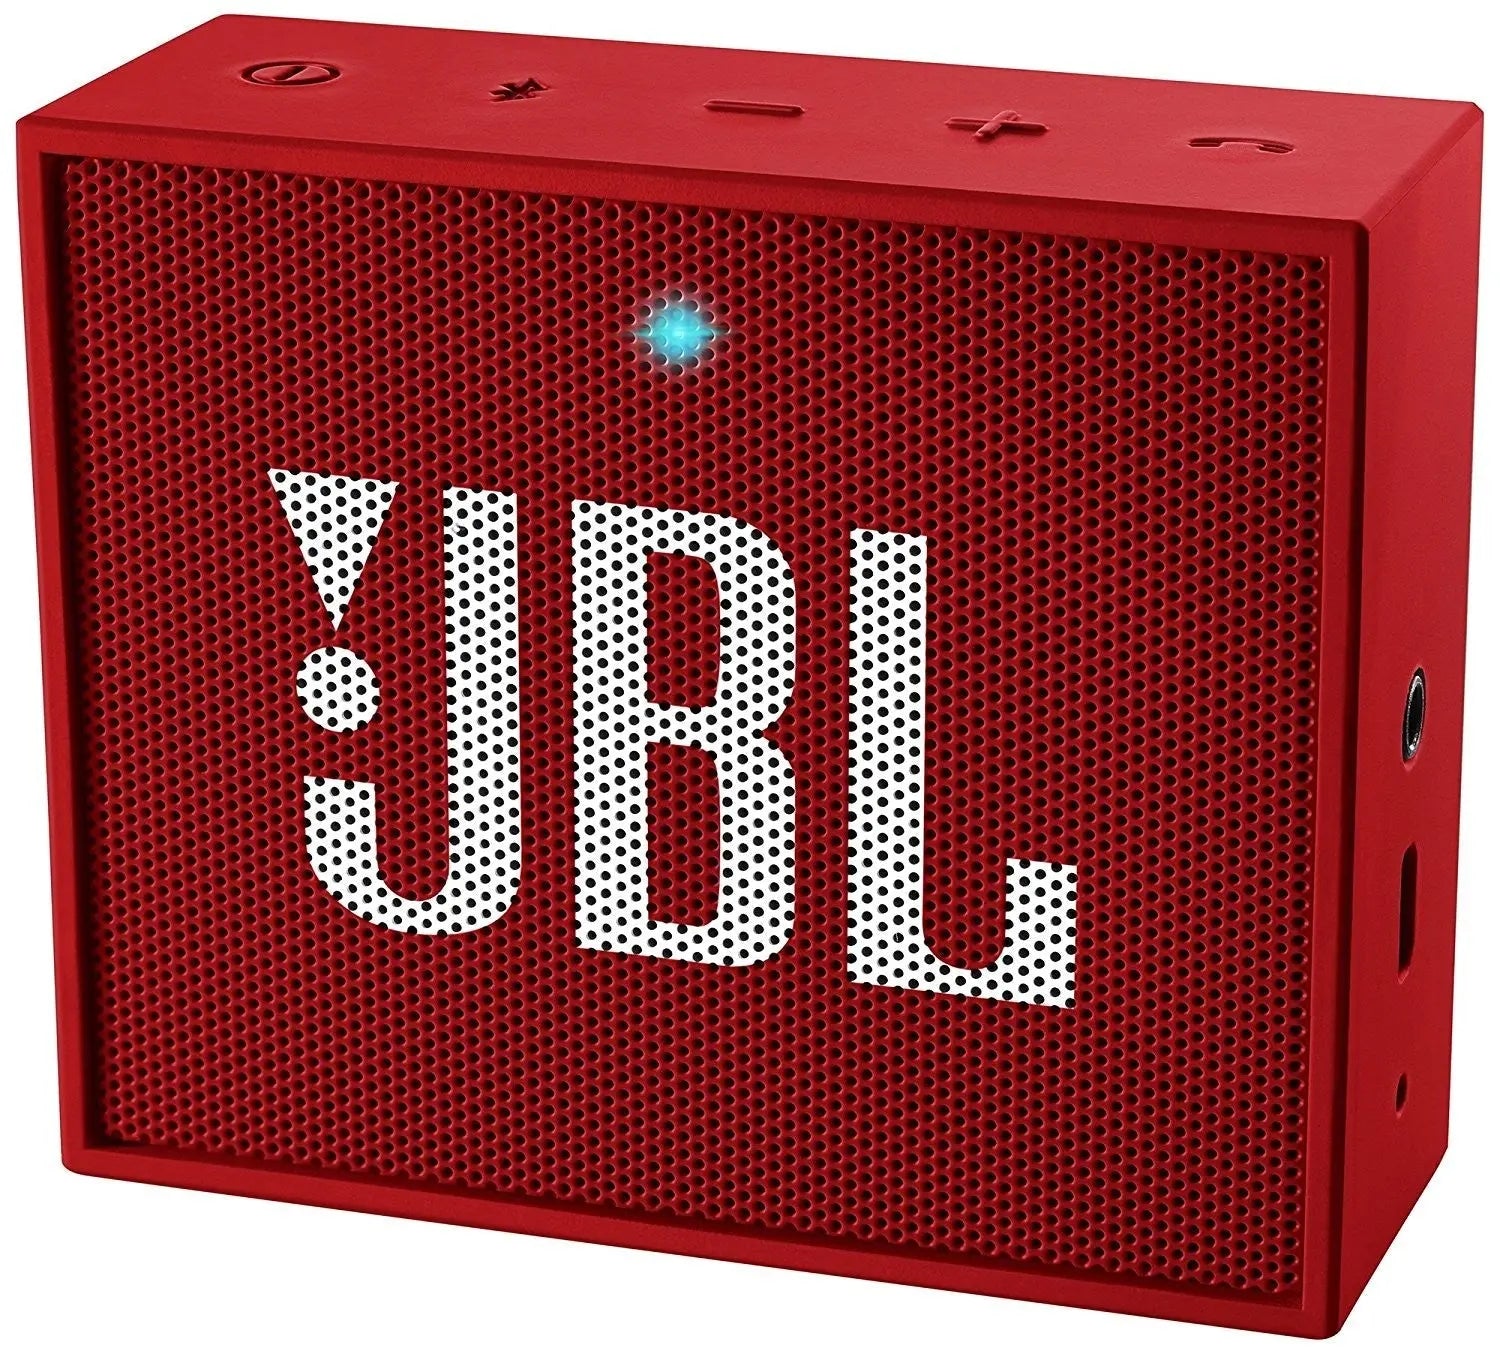 JBL Go portable bluetooth speaker in orange